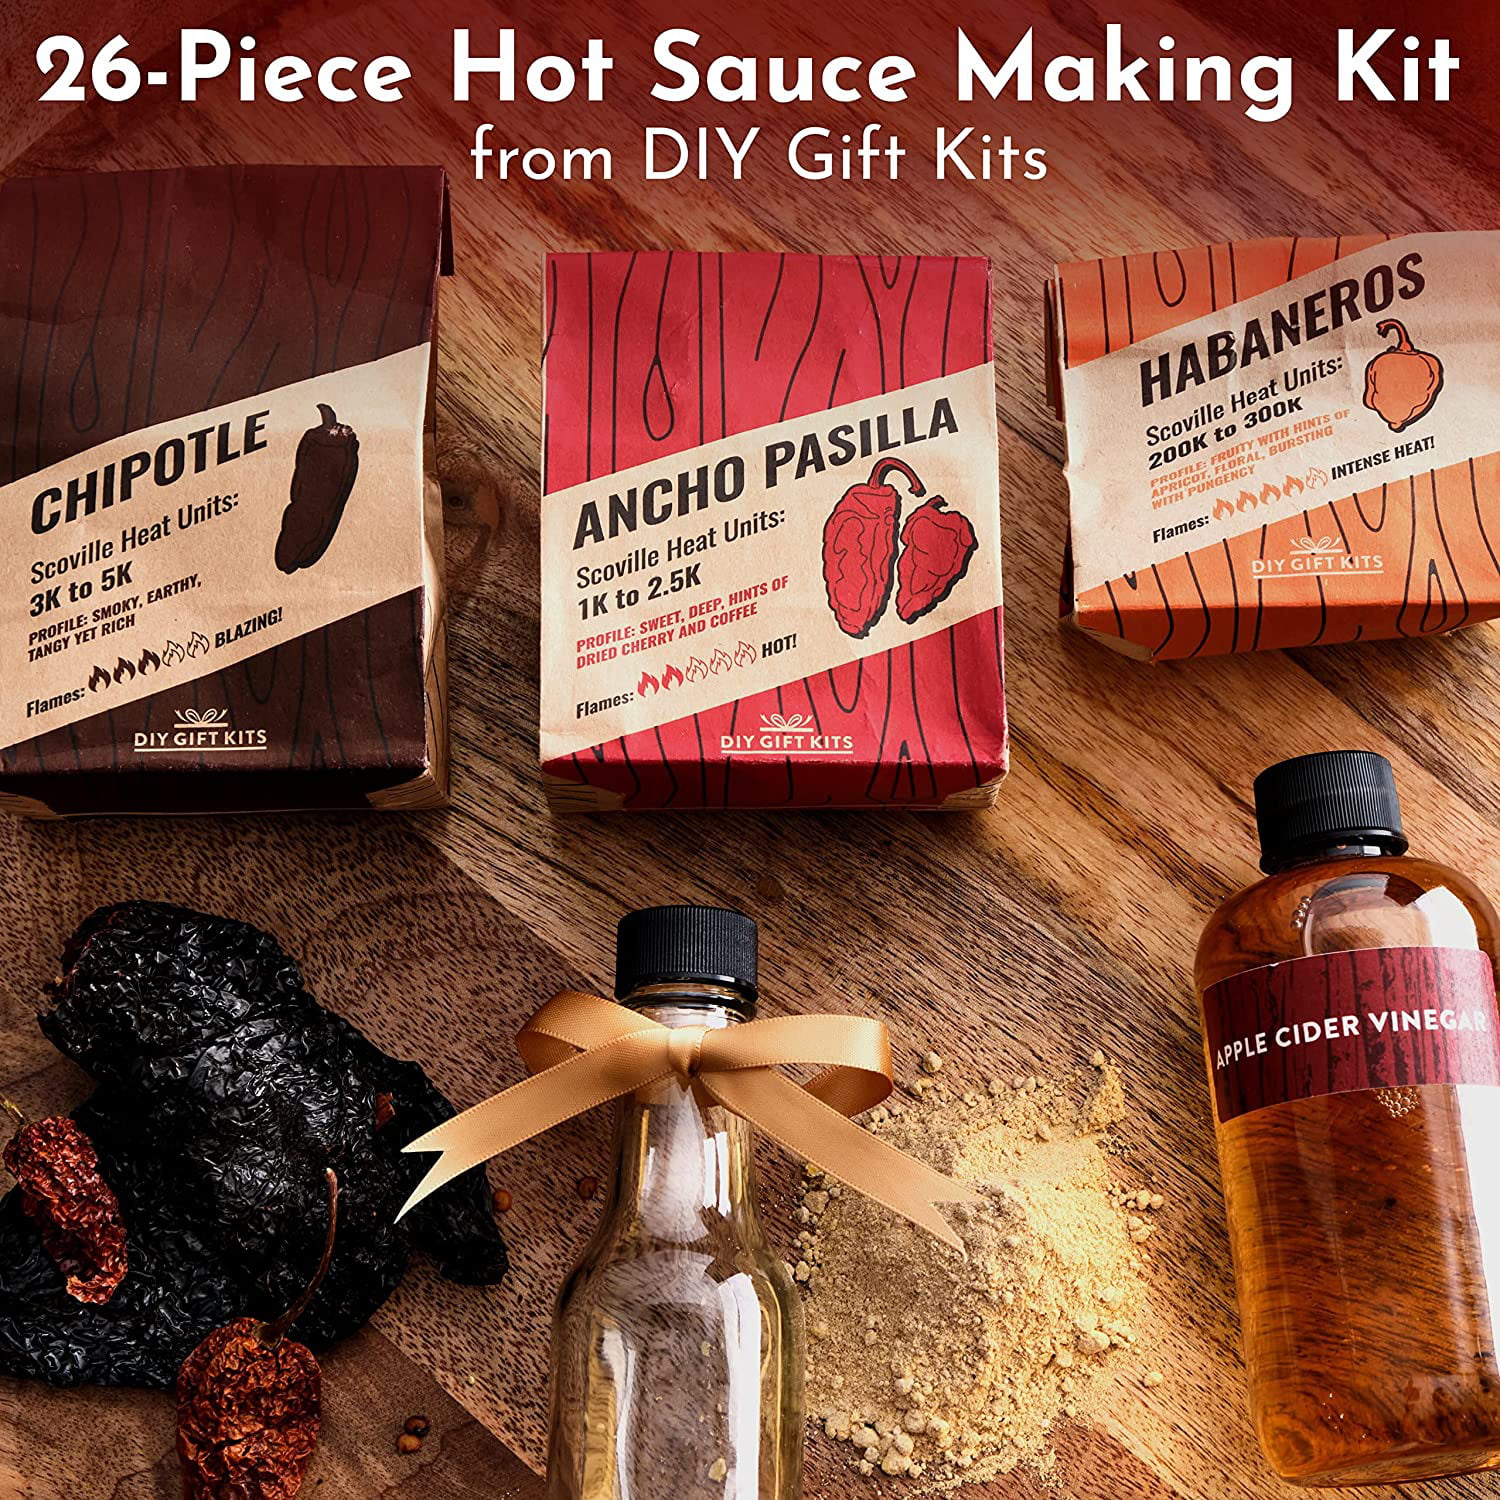 Deluxe Hot Sauce Making DIY Kit